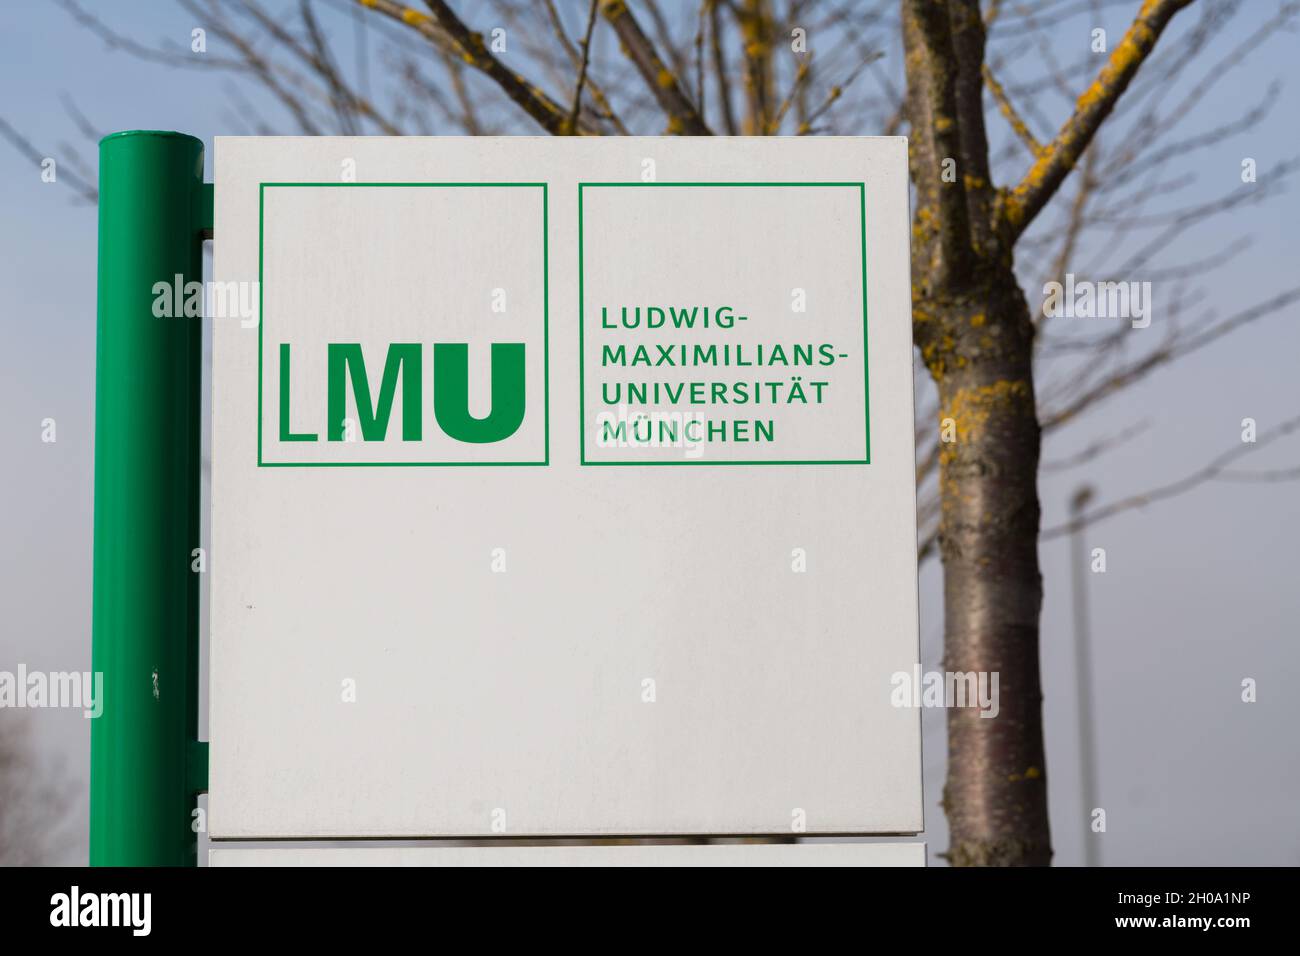 Martinsried, Alemania - Mar 9, 2021: Señal en LMU - Ludwig-Maximilians-Universität München. Famosa universidad situada en Munich, Alemania. Foto de stock